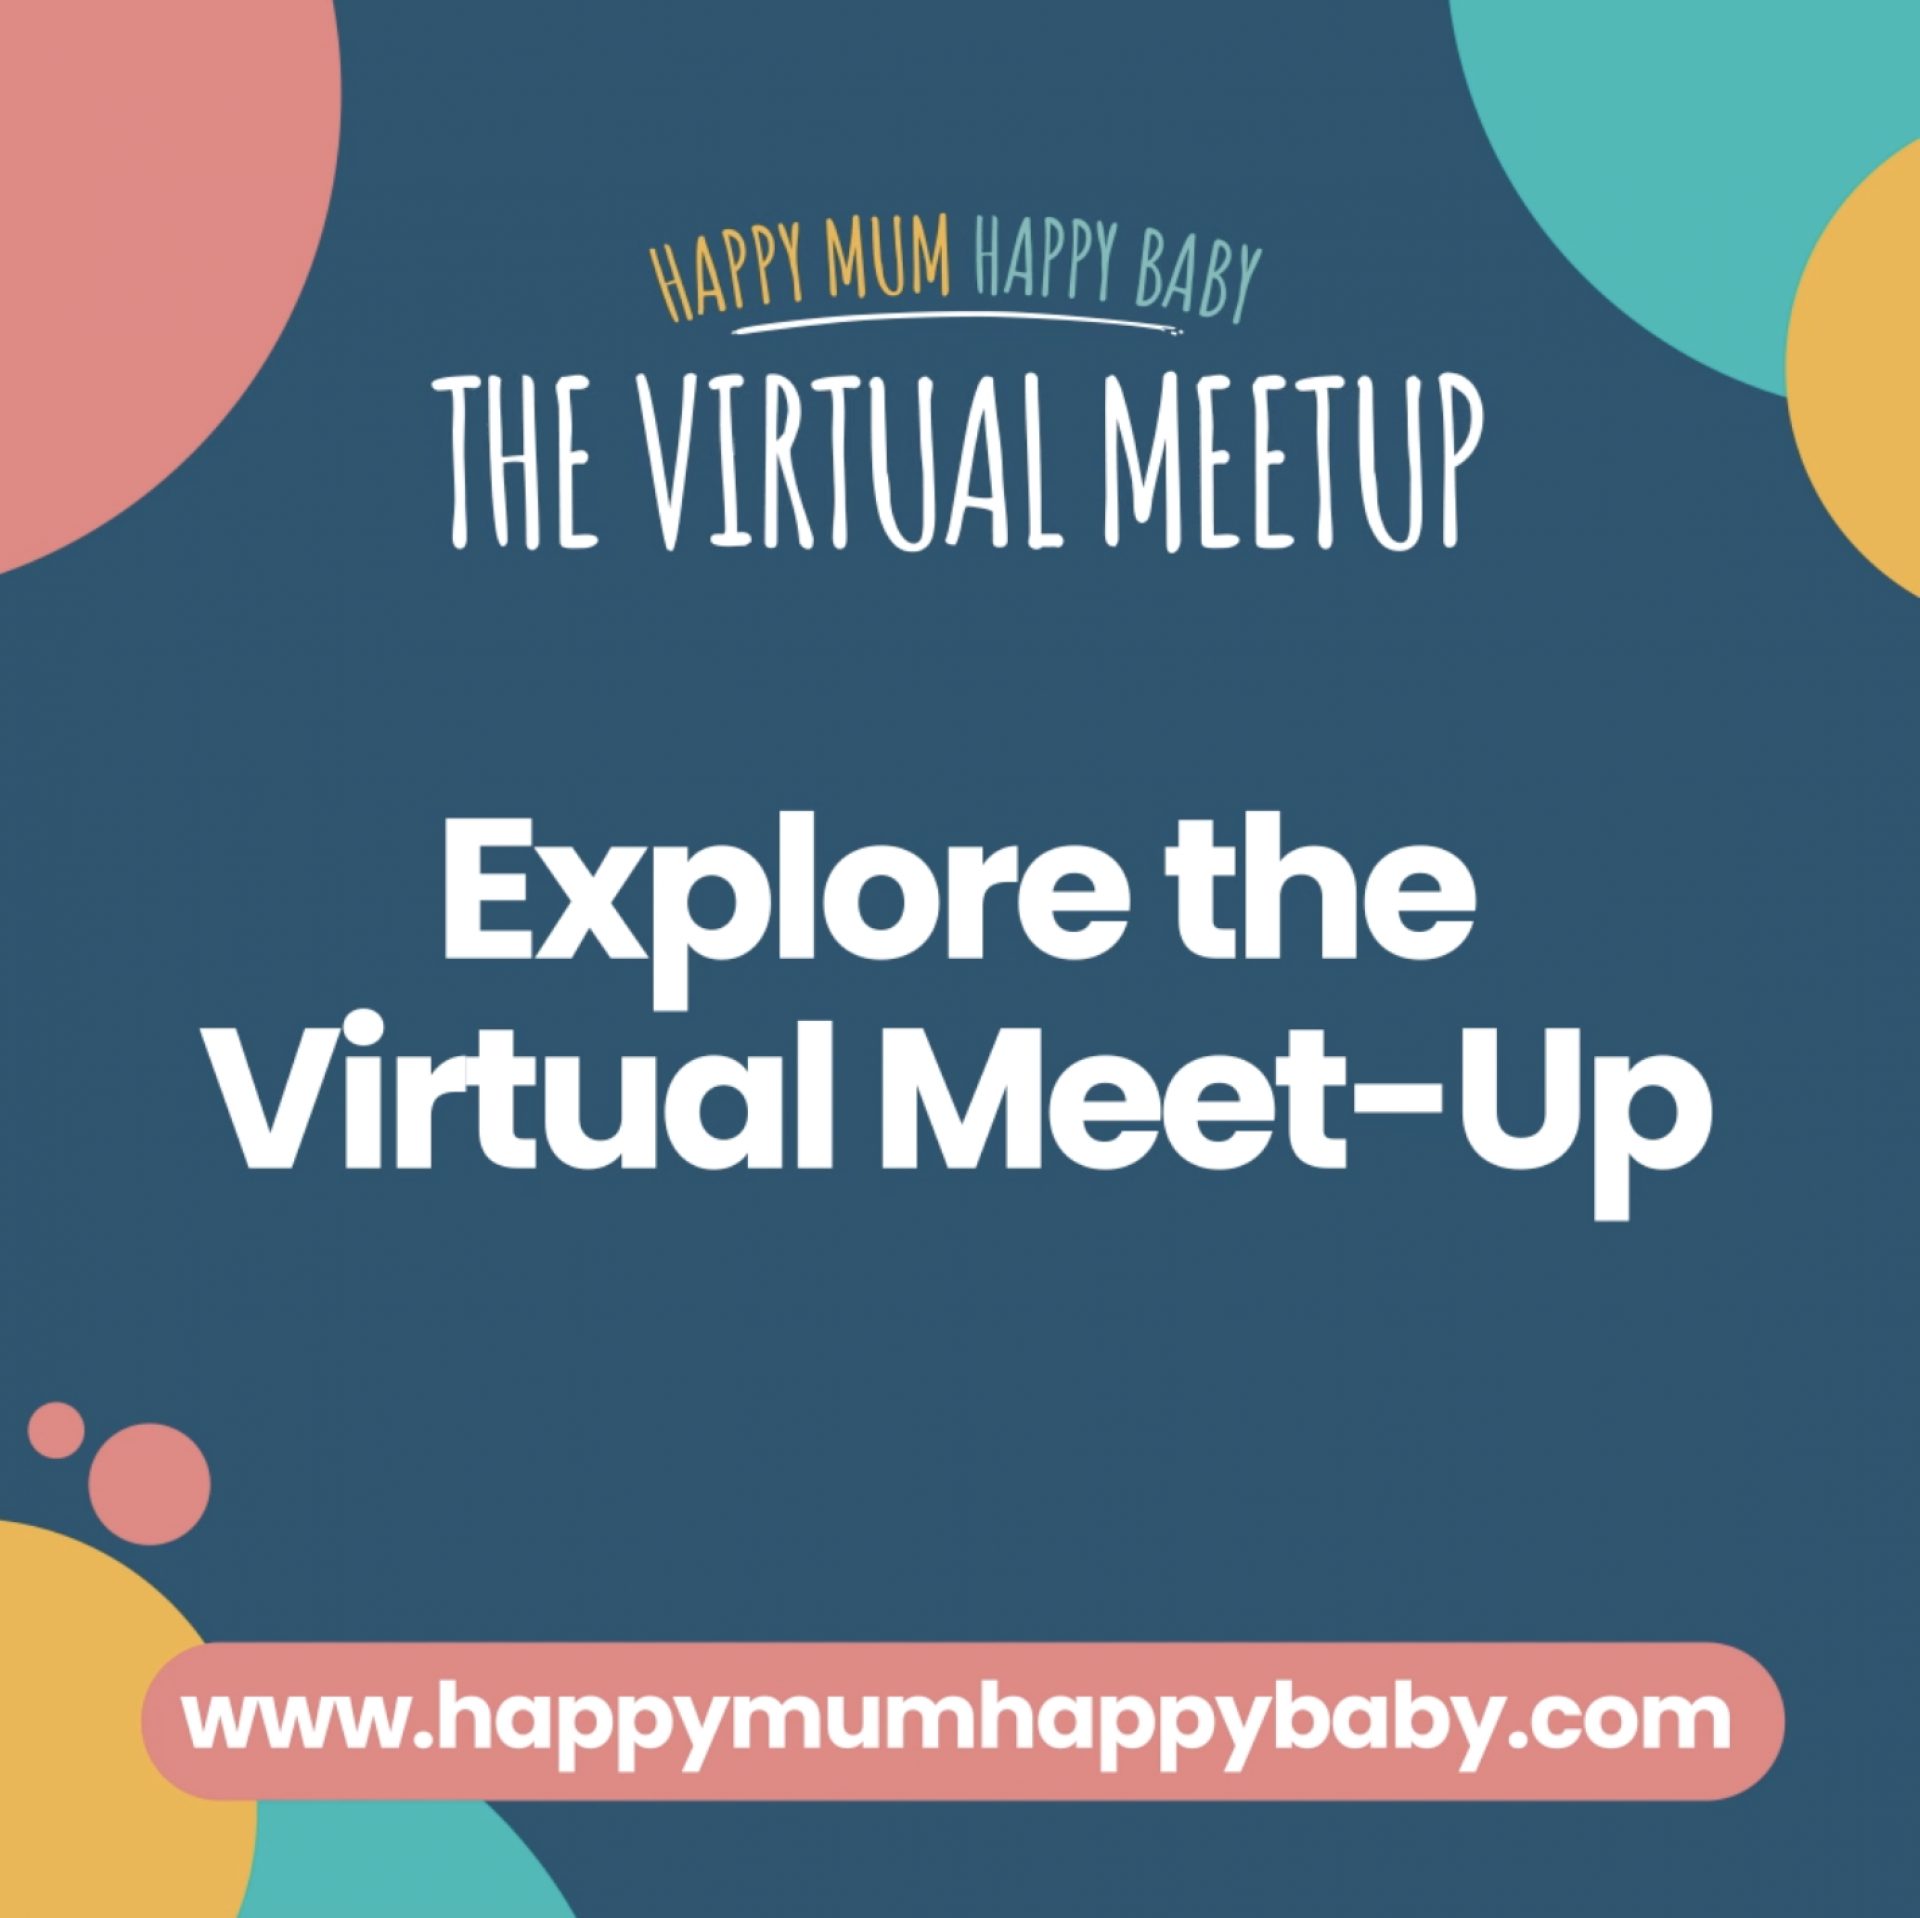 Happy Mum Happy Baby; The Virtual MeetUp